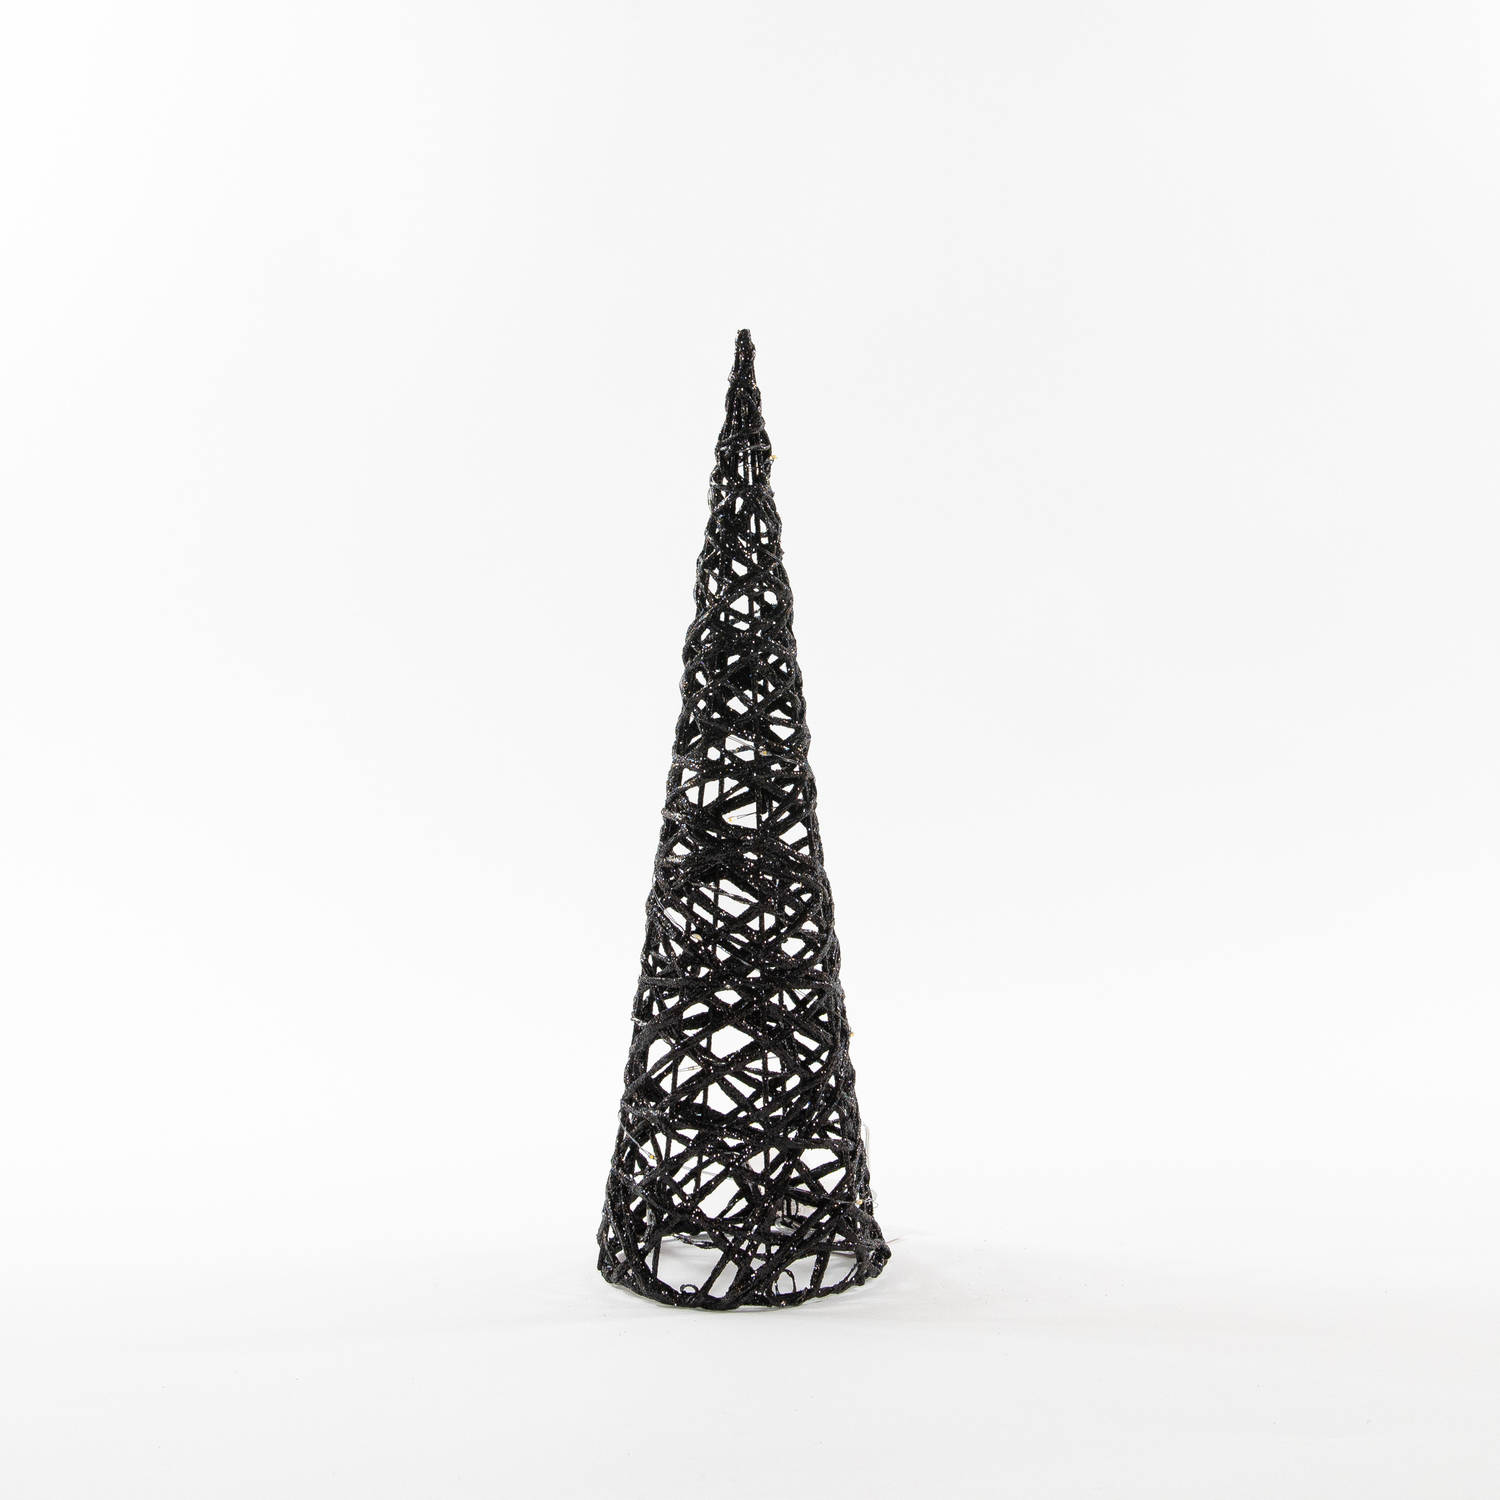 Anna Collection LED piramide kerstboom H40 cm zwart kunststof kerstverlichting figuur